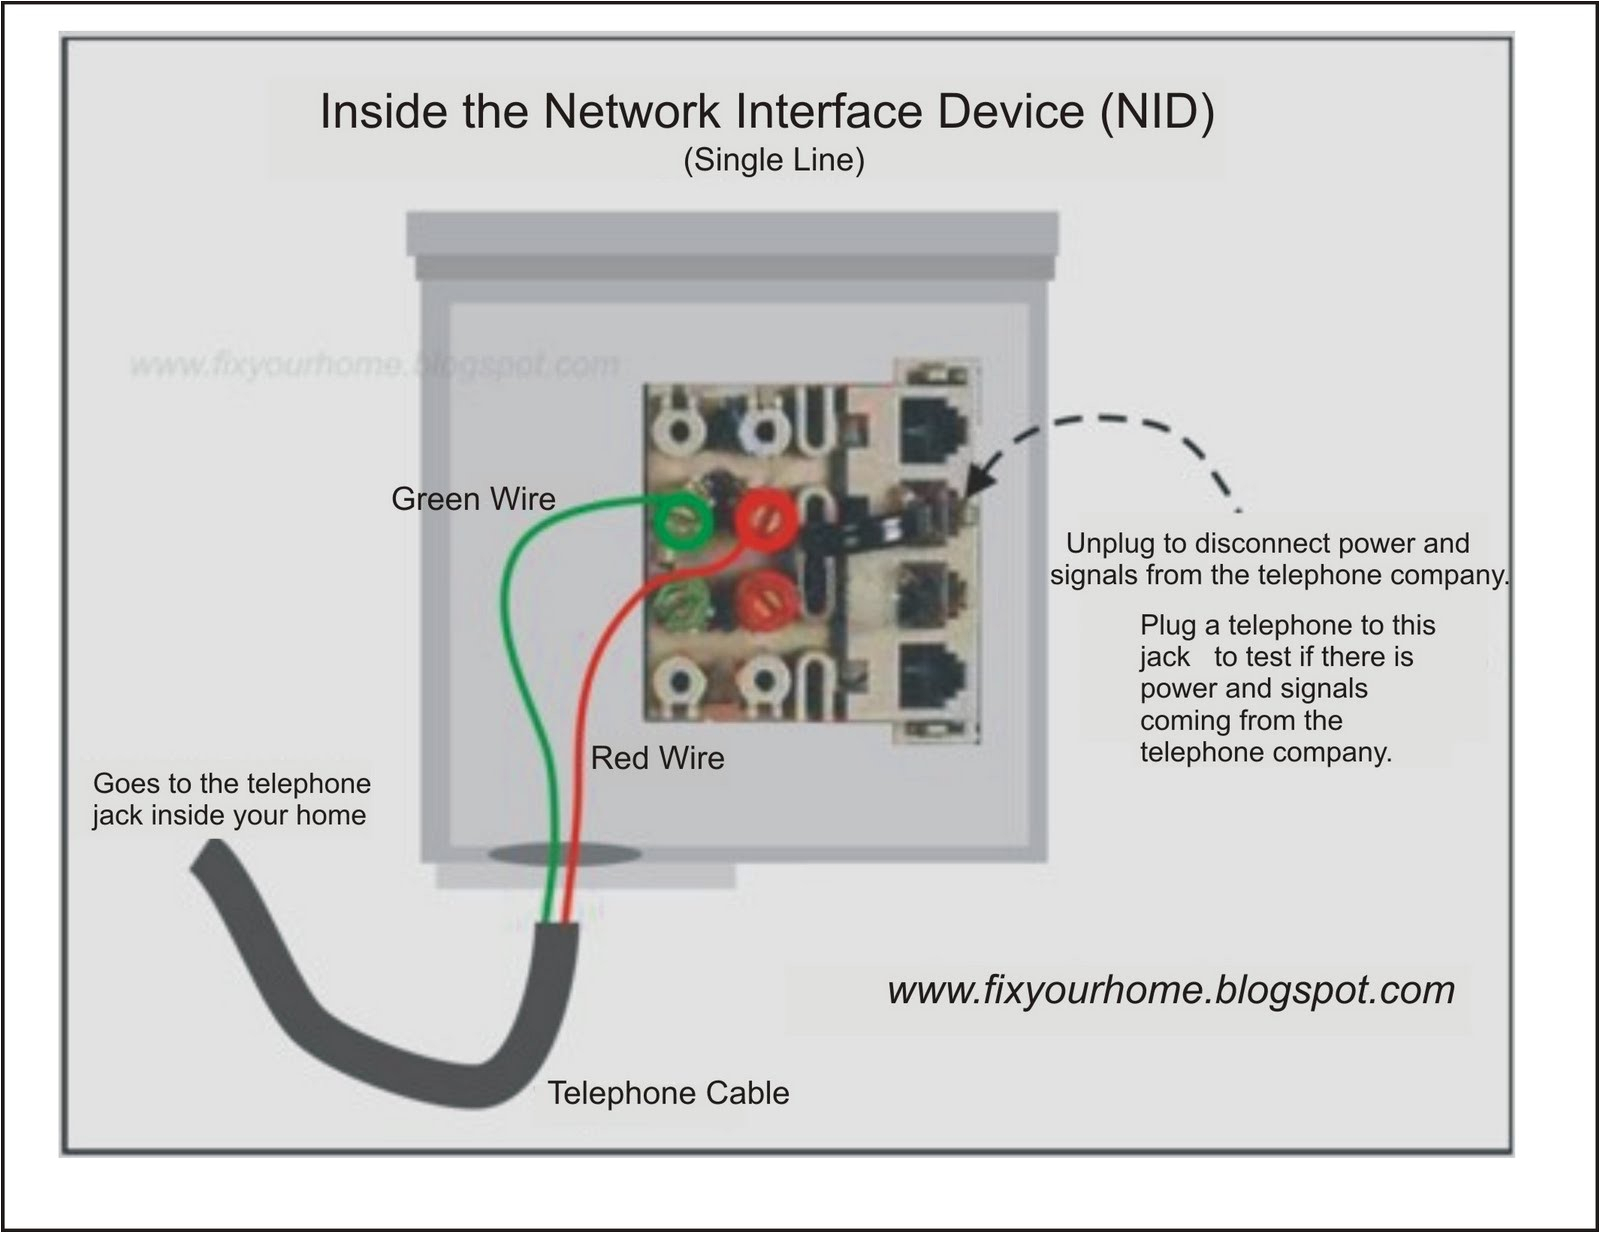 centurylink nid wiring diagram nid wiring diagram at t phone box diagrams 13 at t dsl work wiring diagram harness database centurylink 7i jpg